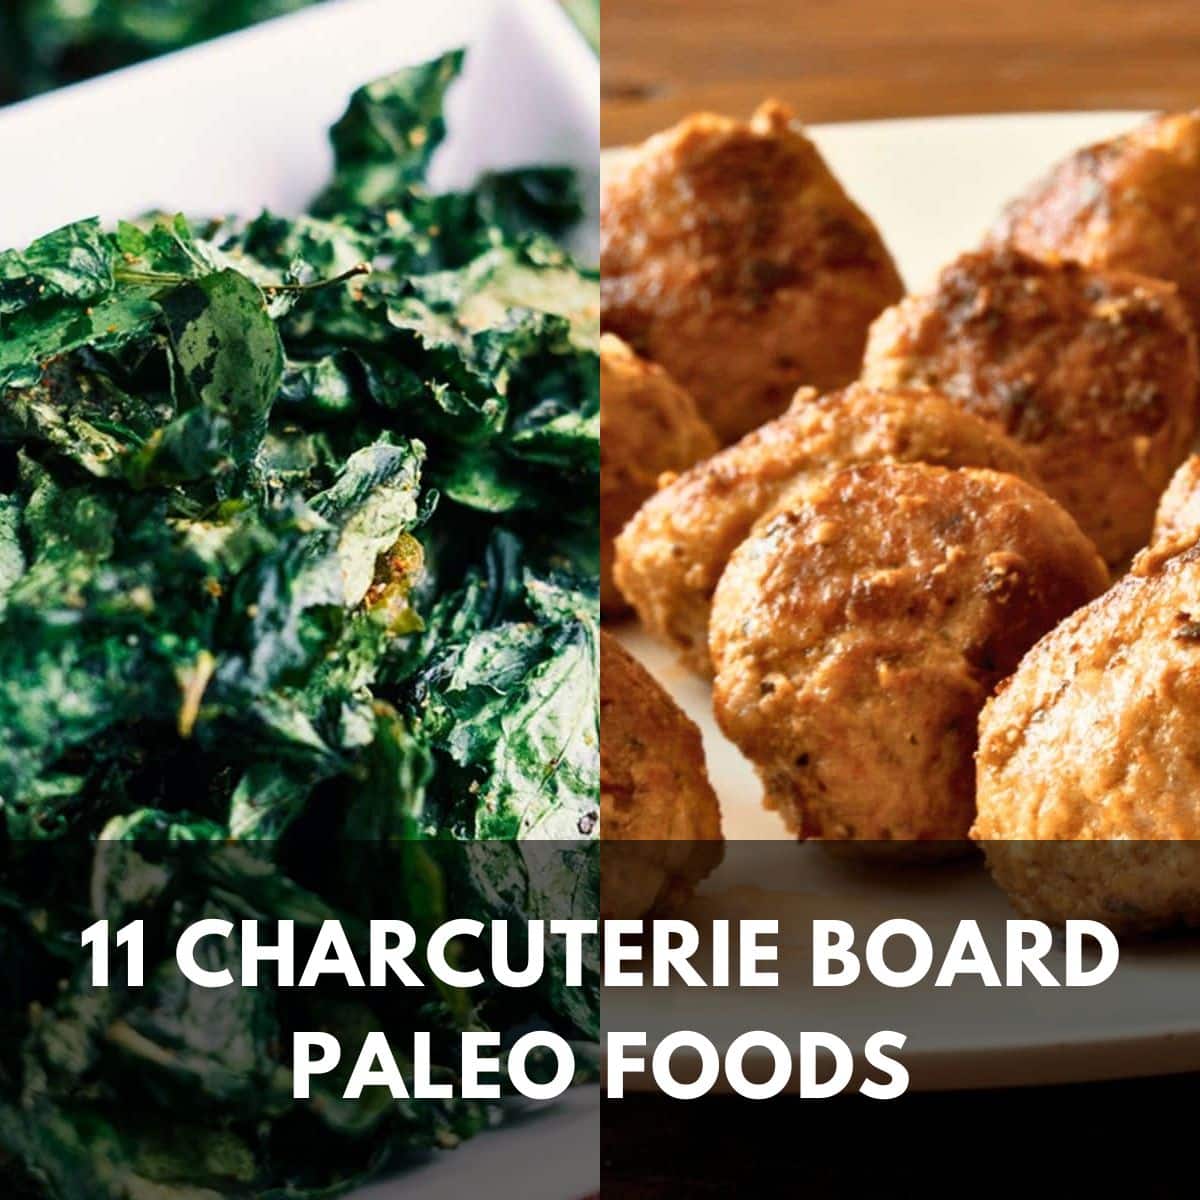 11 charcuterie board paleo foods main